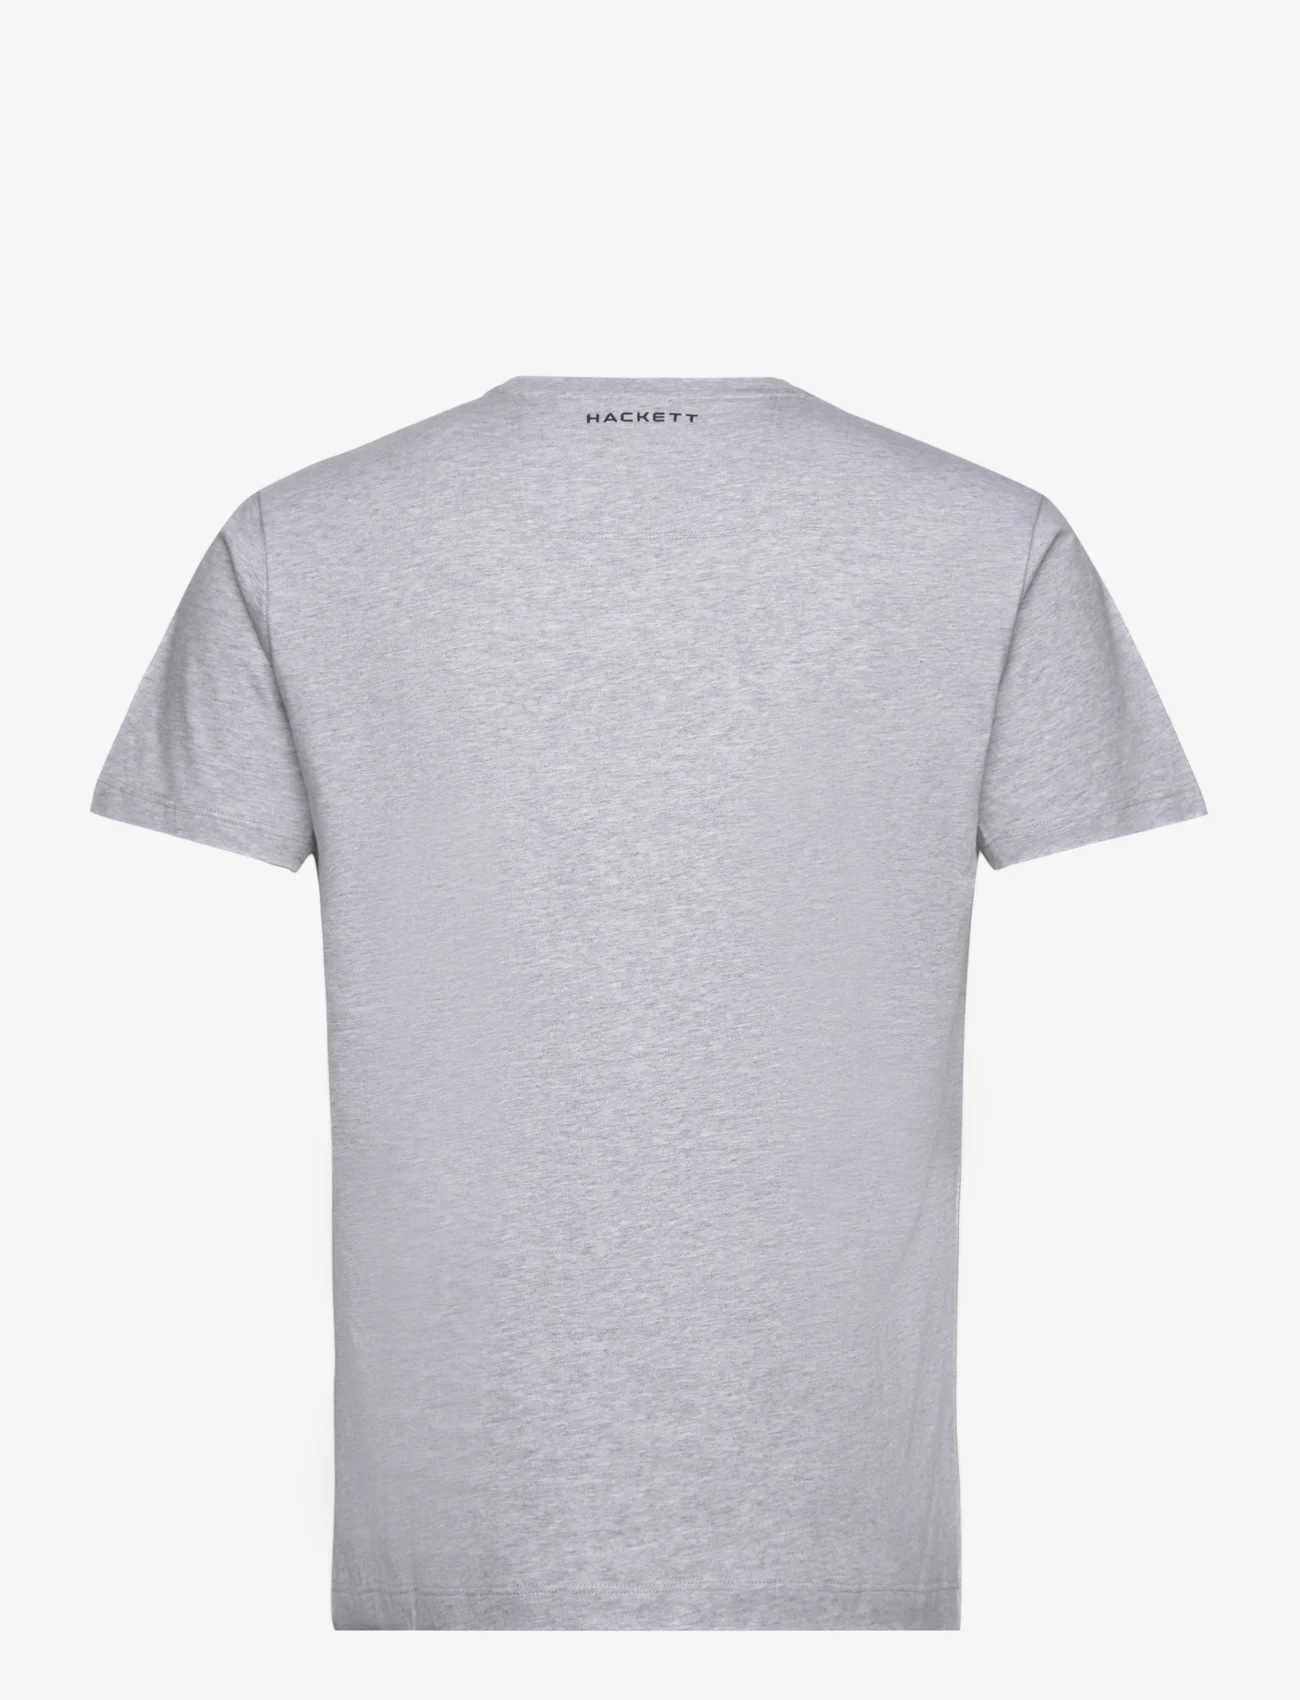 Hackett London - AM EMBOSS TEE - marškinėliai trumpomis rankovėmis - ice grey - 1